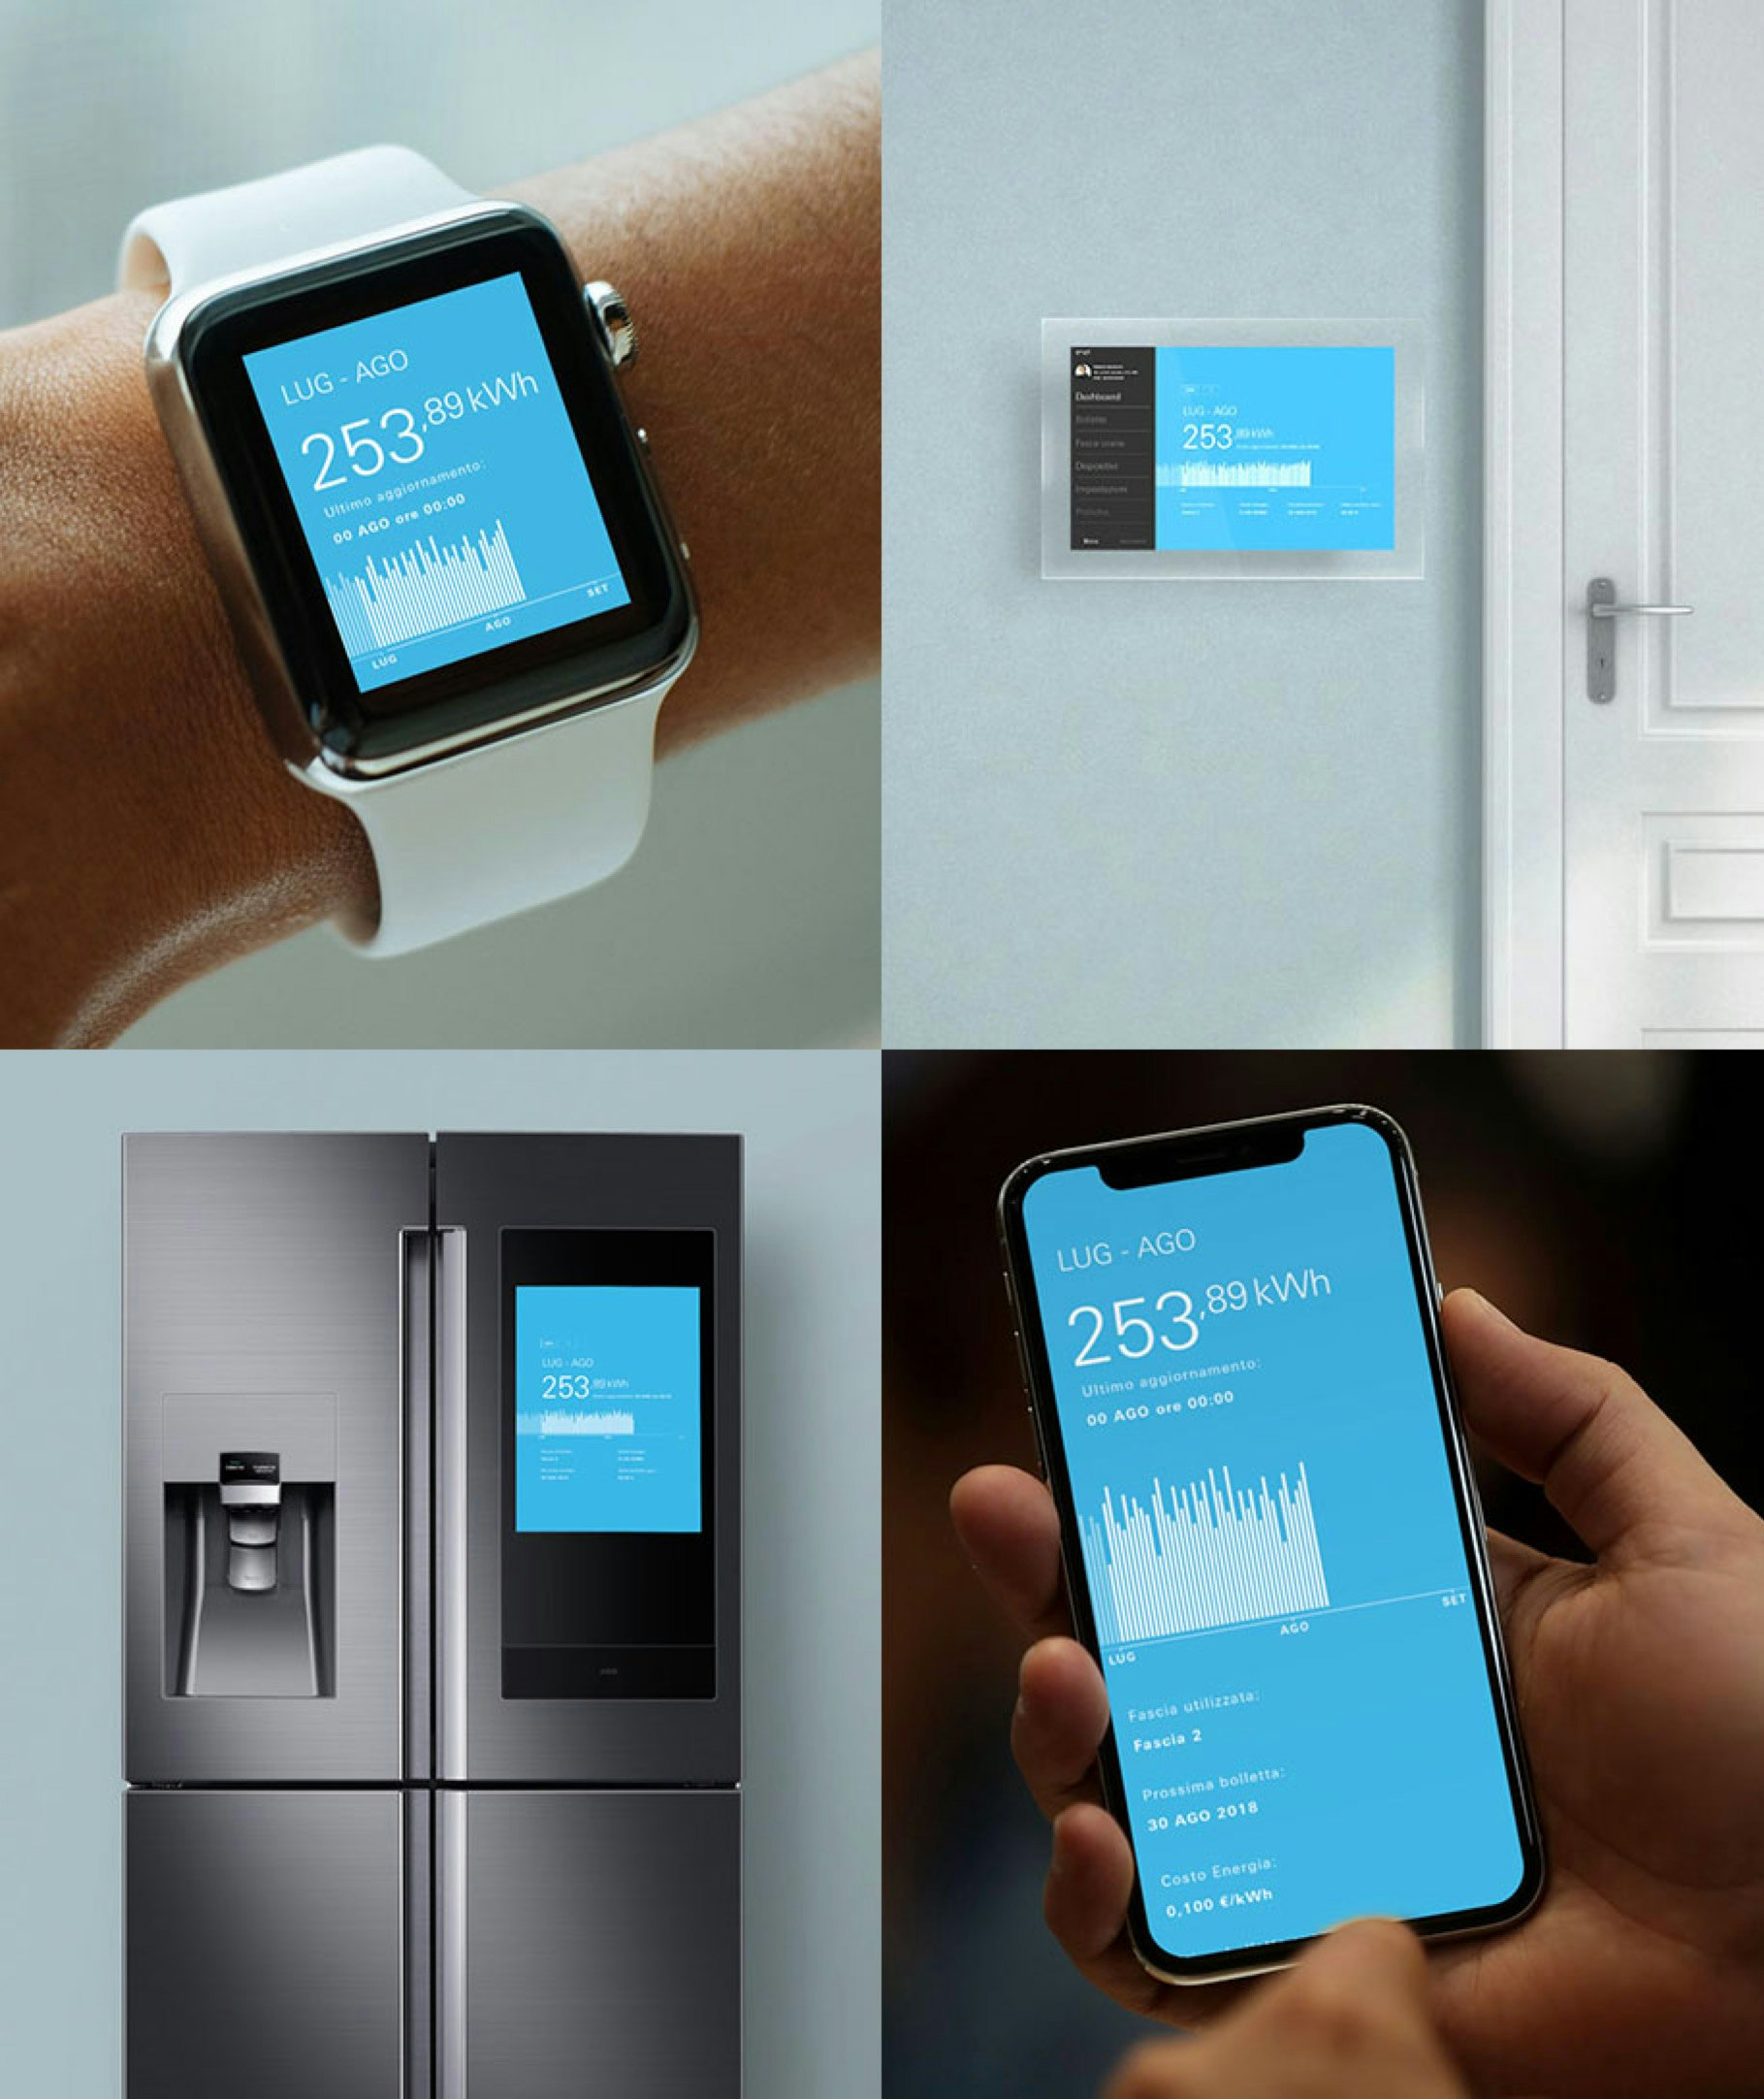 Sketchin - Future Scenario Design - domotic technology user inteface on mobile app, iwatch, IOT 